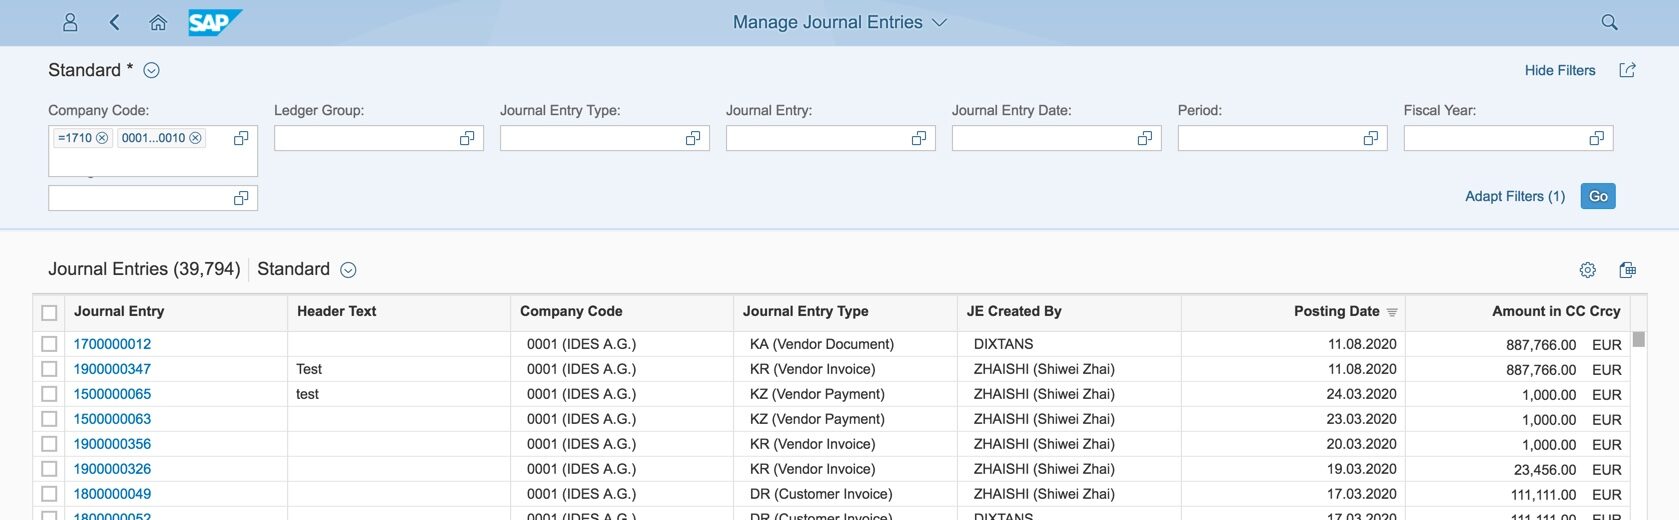 manage-journal-entries-multiple-defaults-9629884